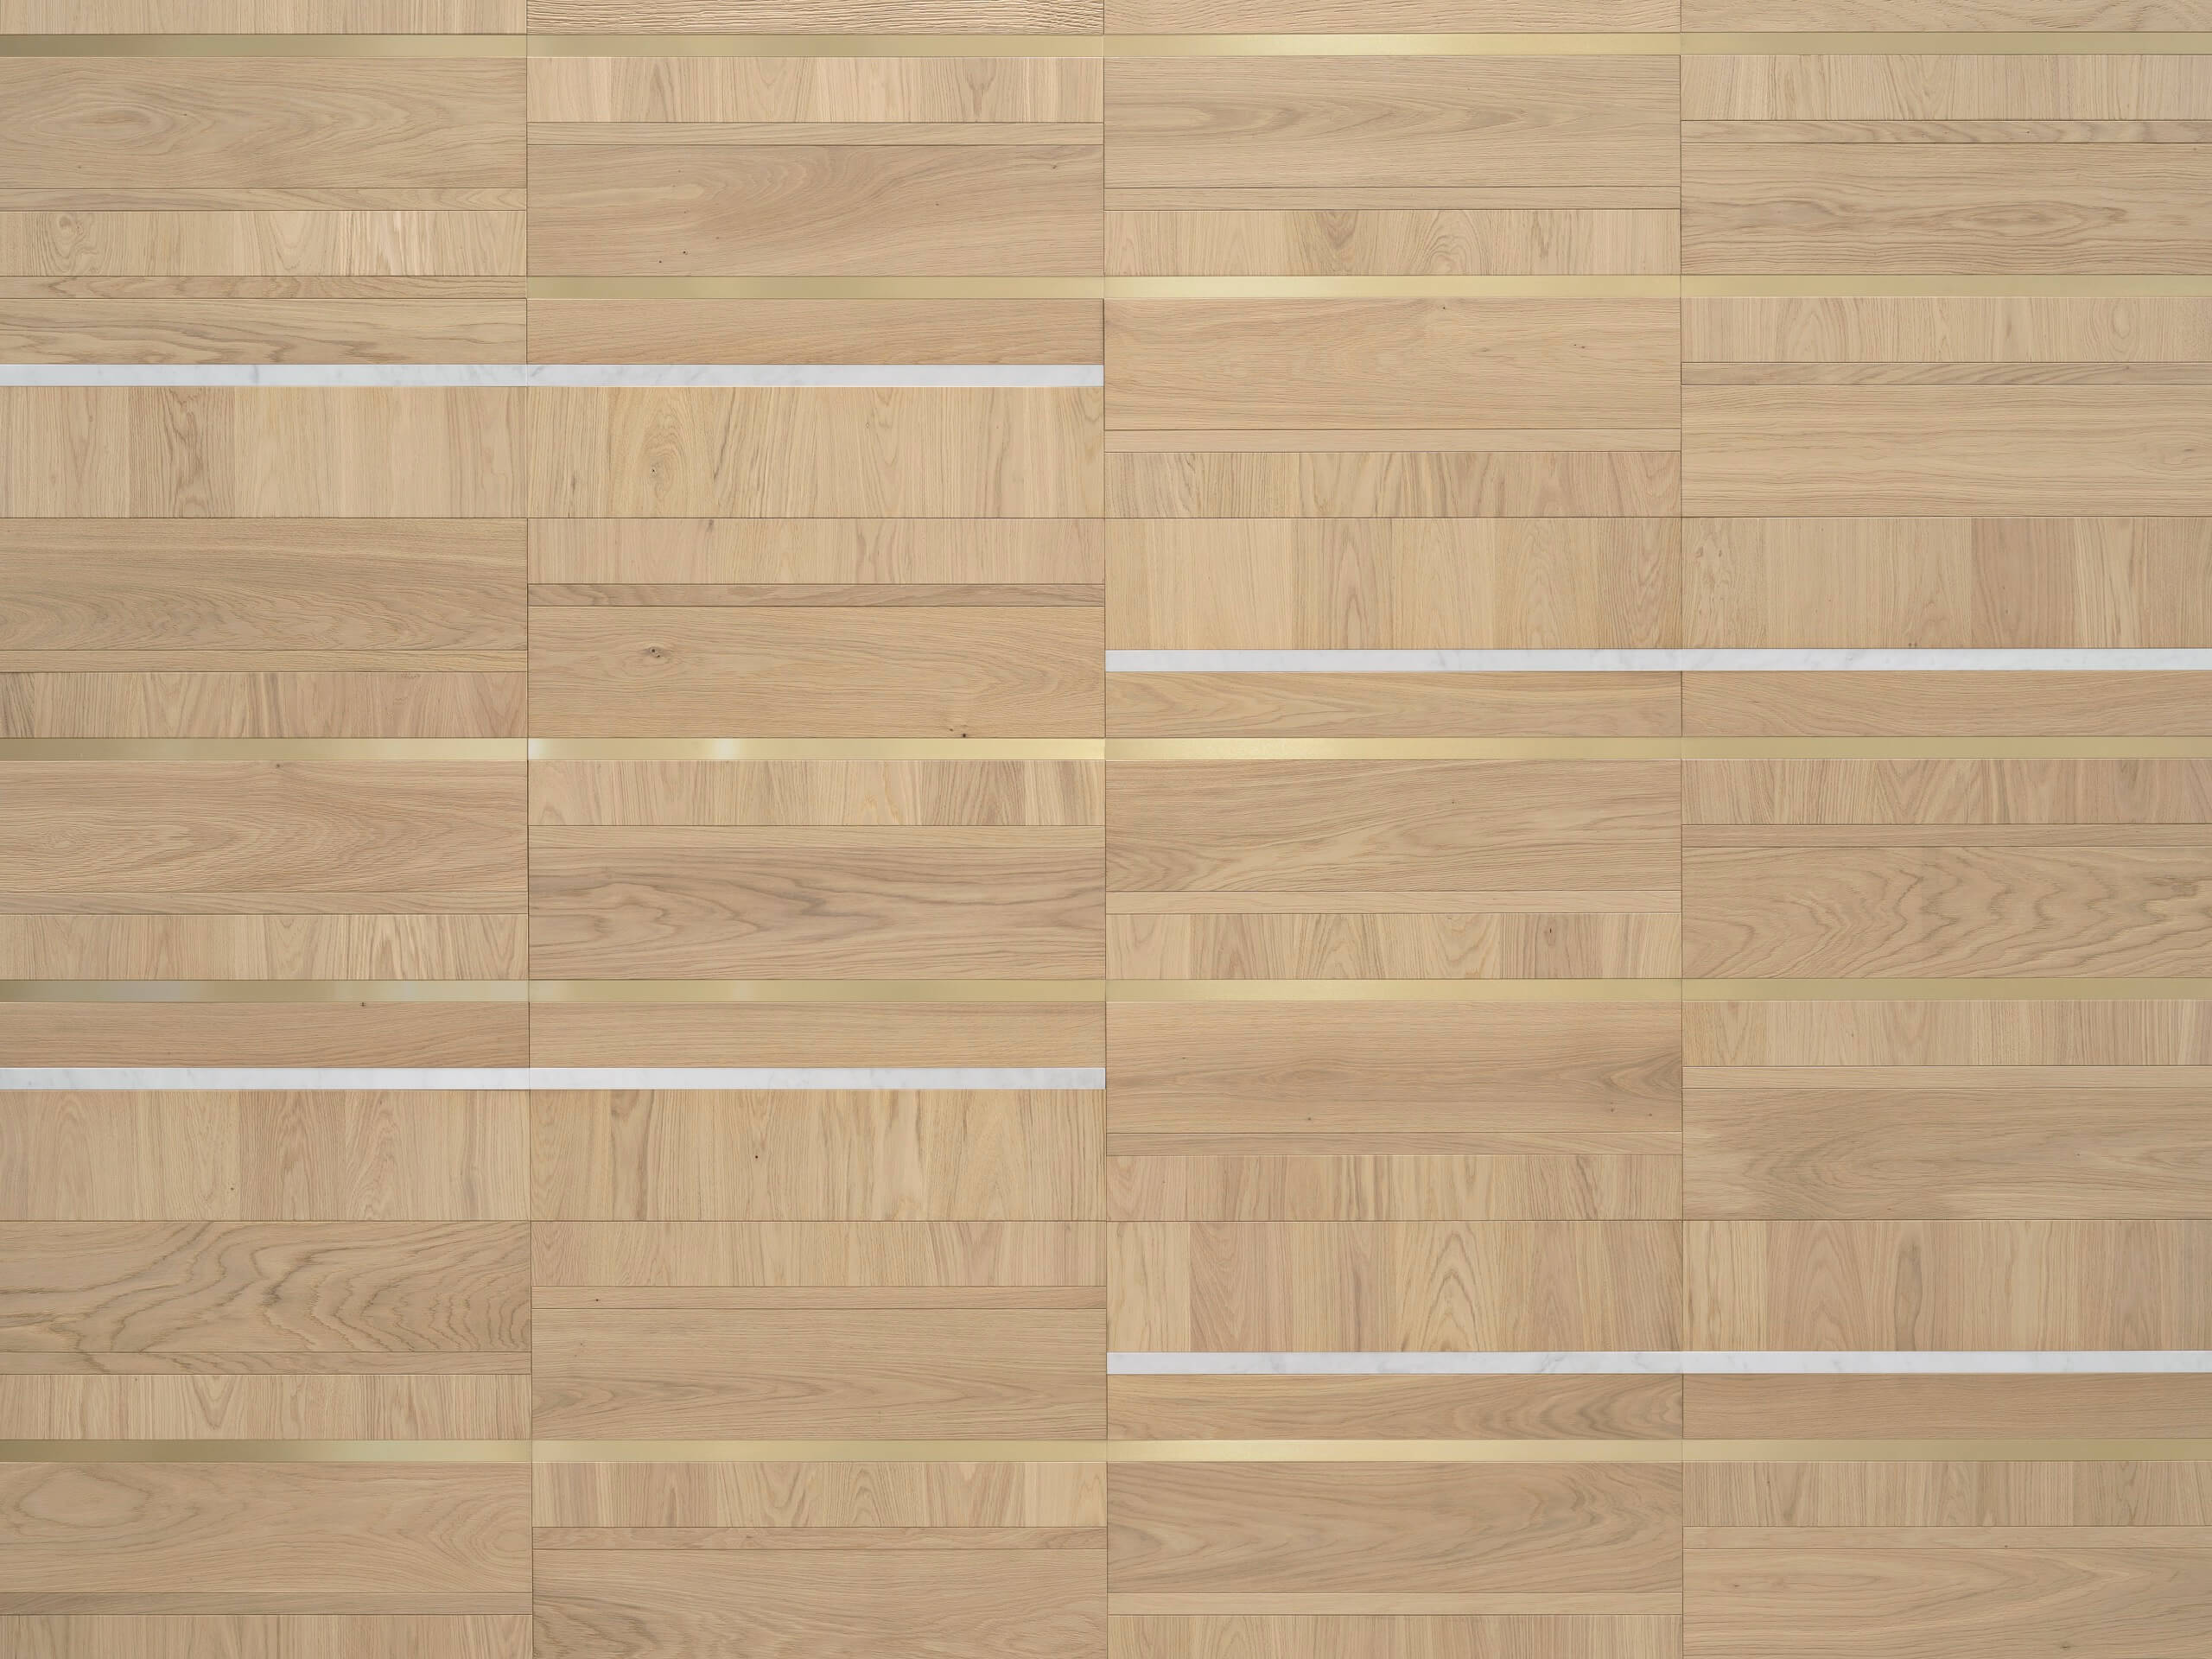 Regolo modular floor in Walnut or Oak wood.